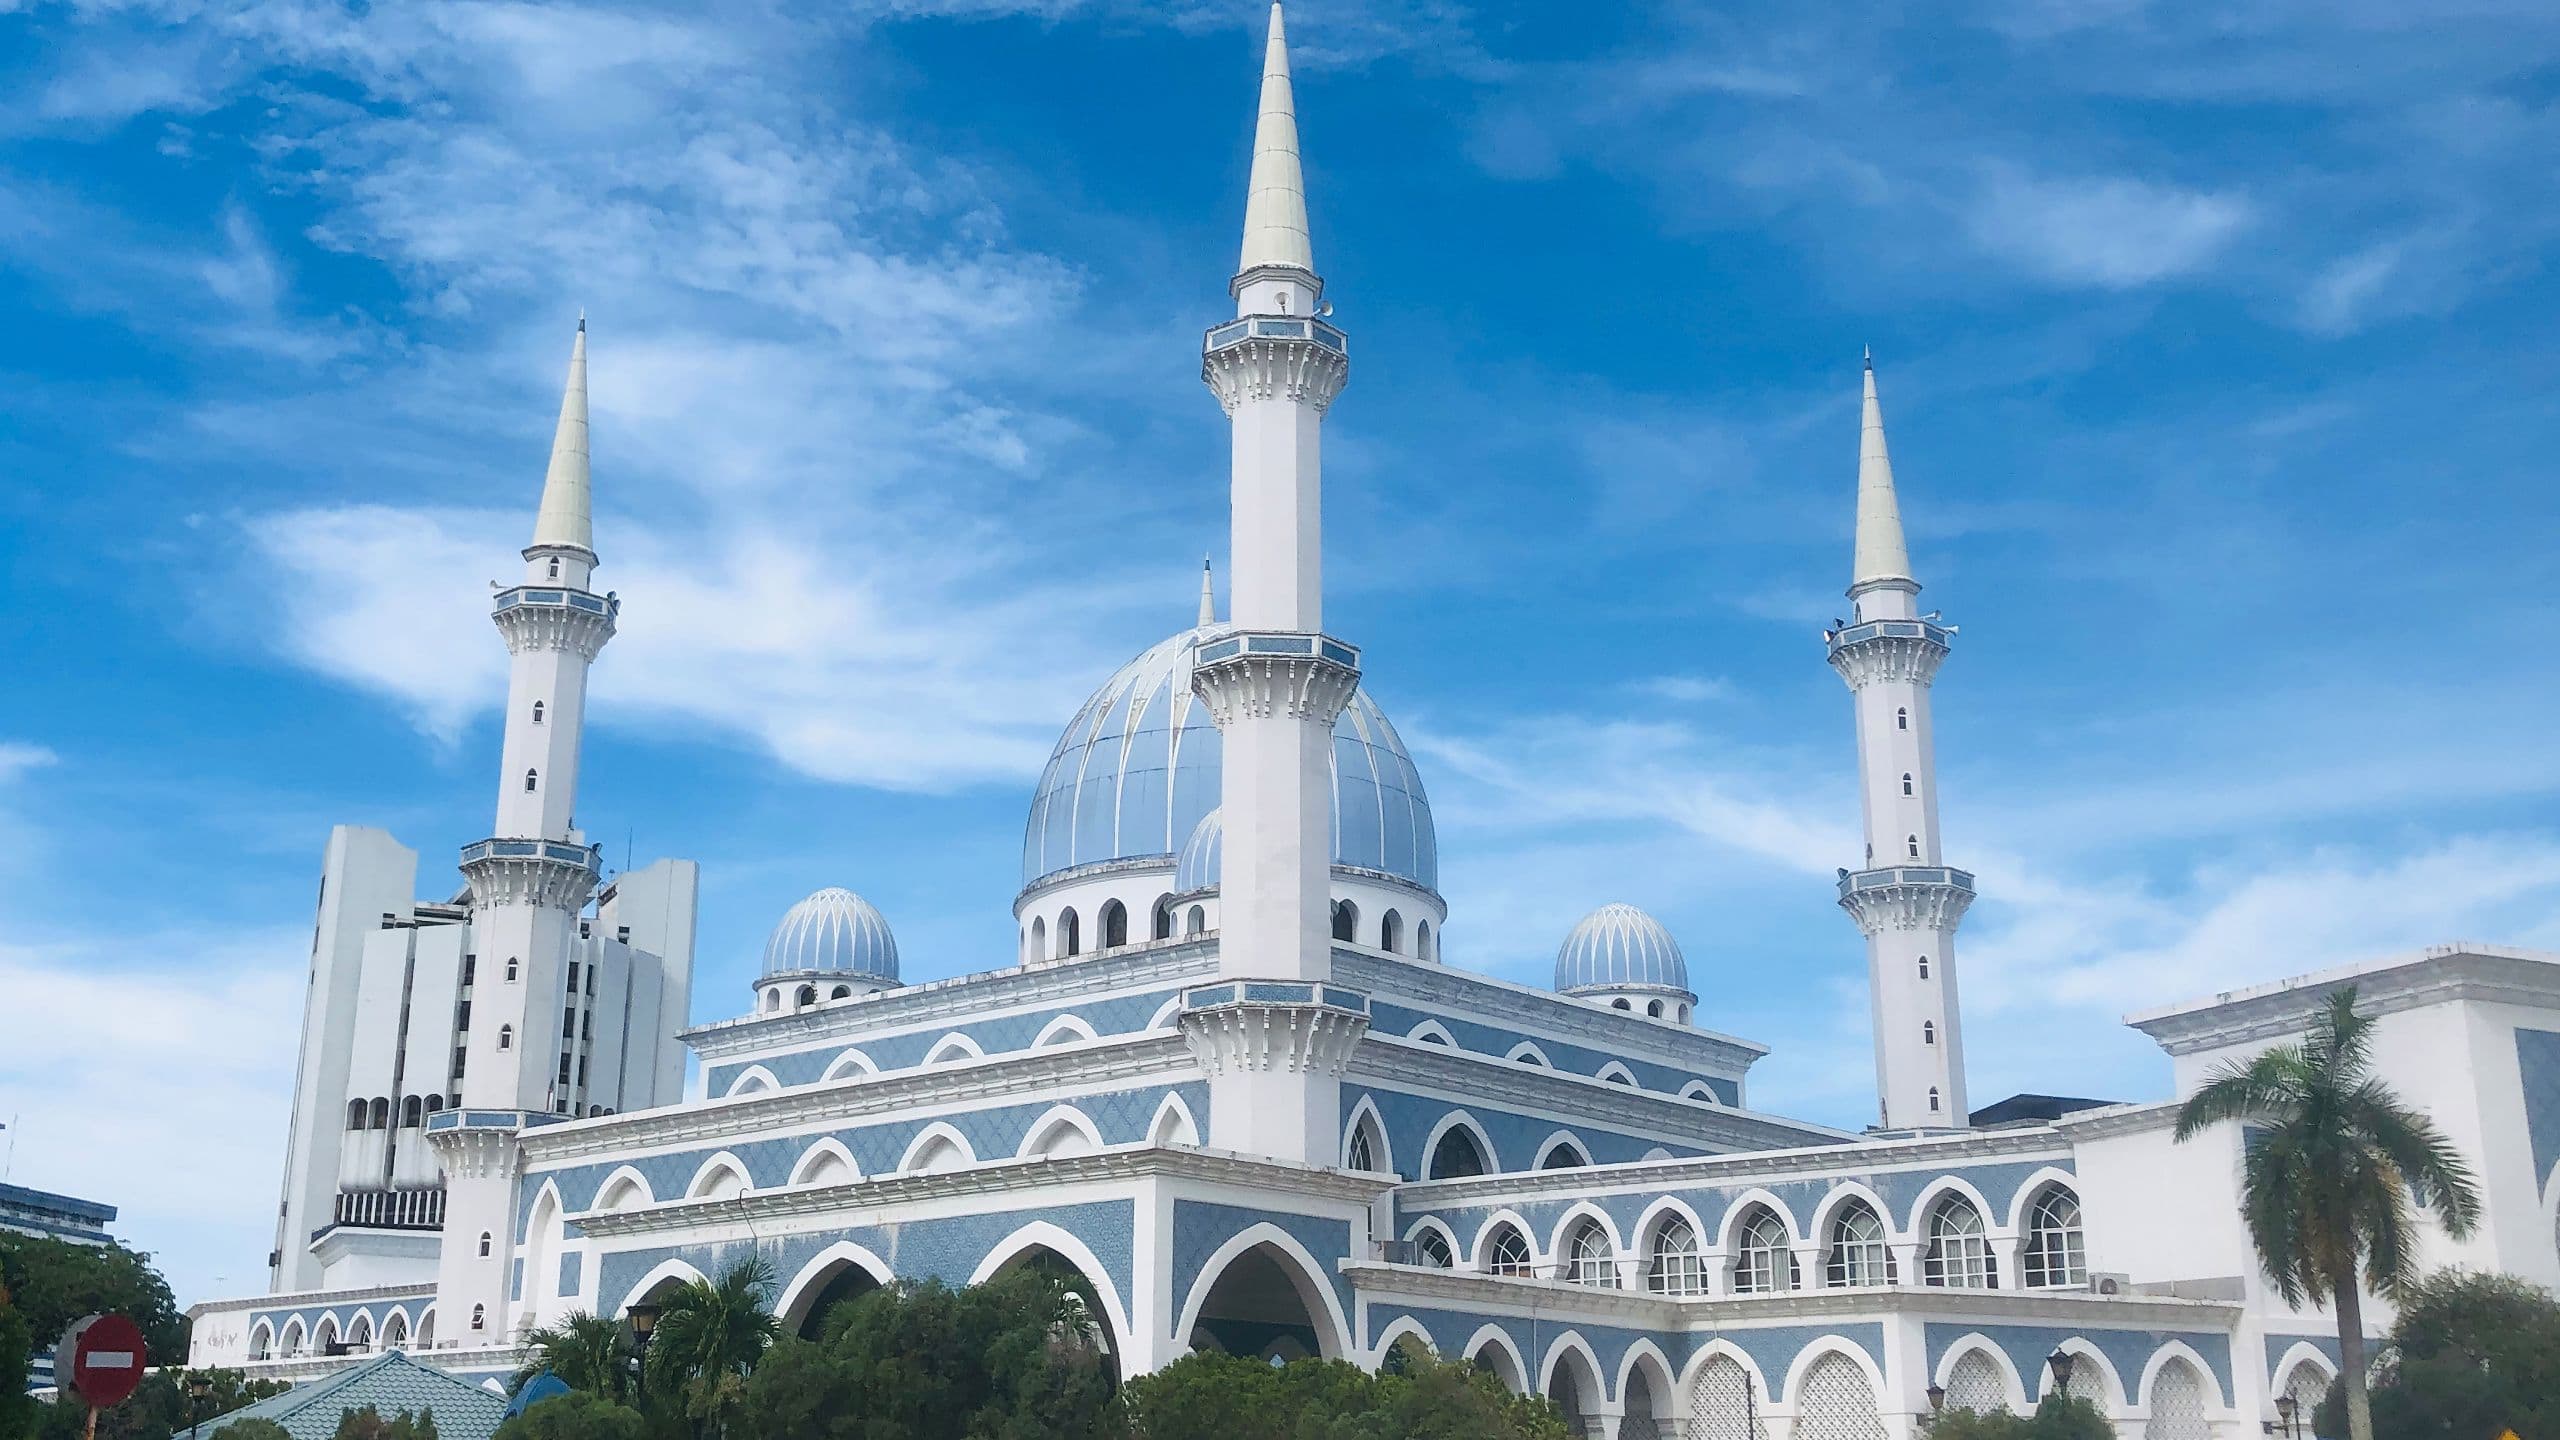 Hyatt Regency Kuantan Resort State Mosque